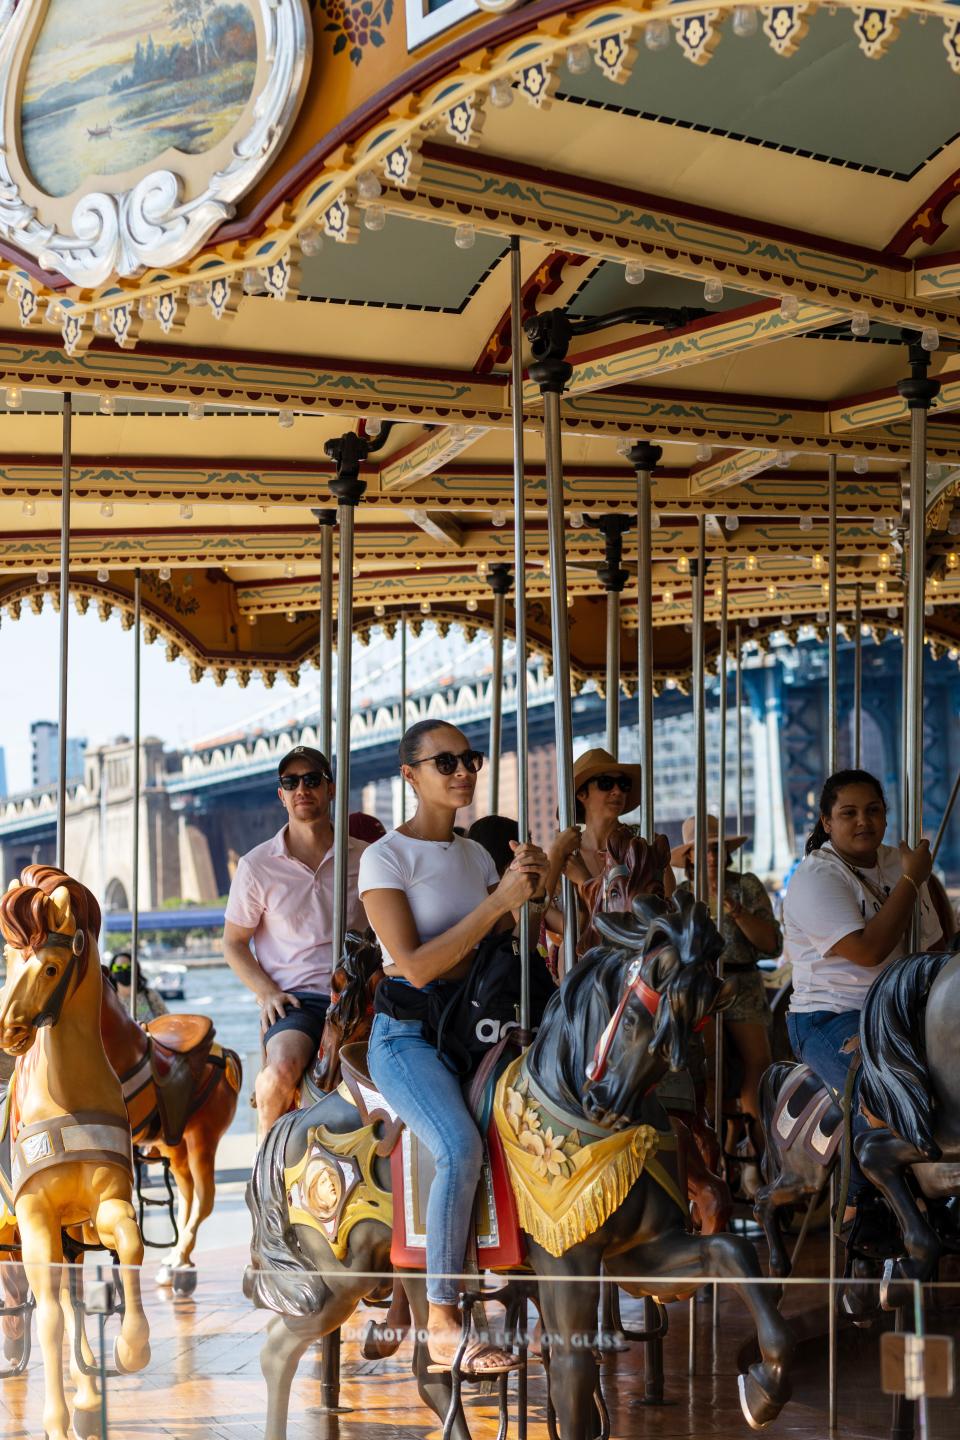 Ride the carousel at the Brooklyn Bridge Park